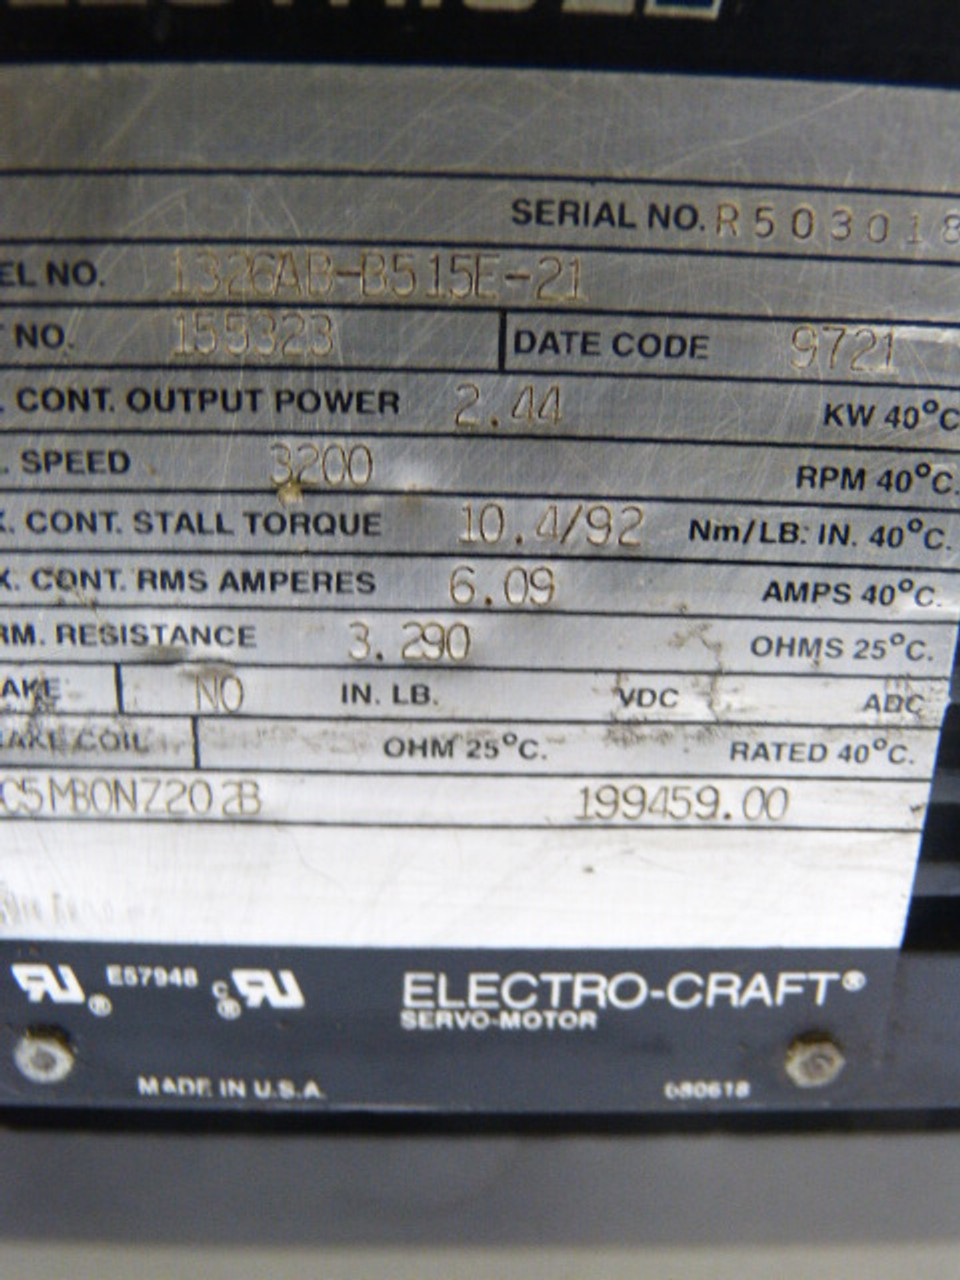 Reliance Electric 1326AB-B515E-21 Servo Motor 3200RPM 460V 10.4Nm USED